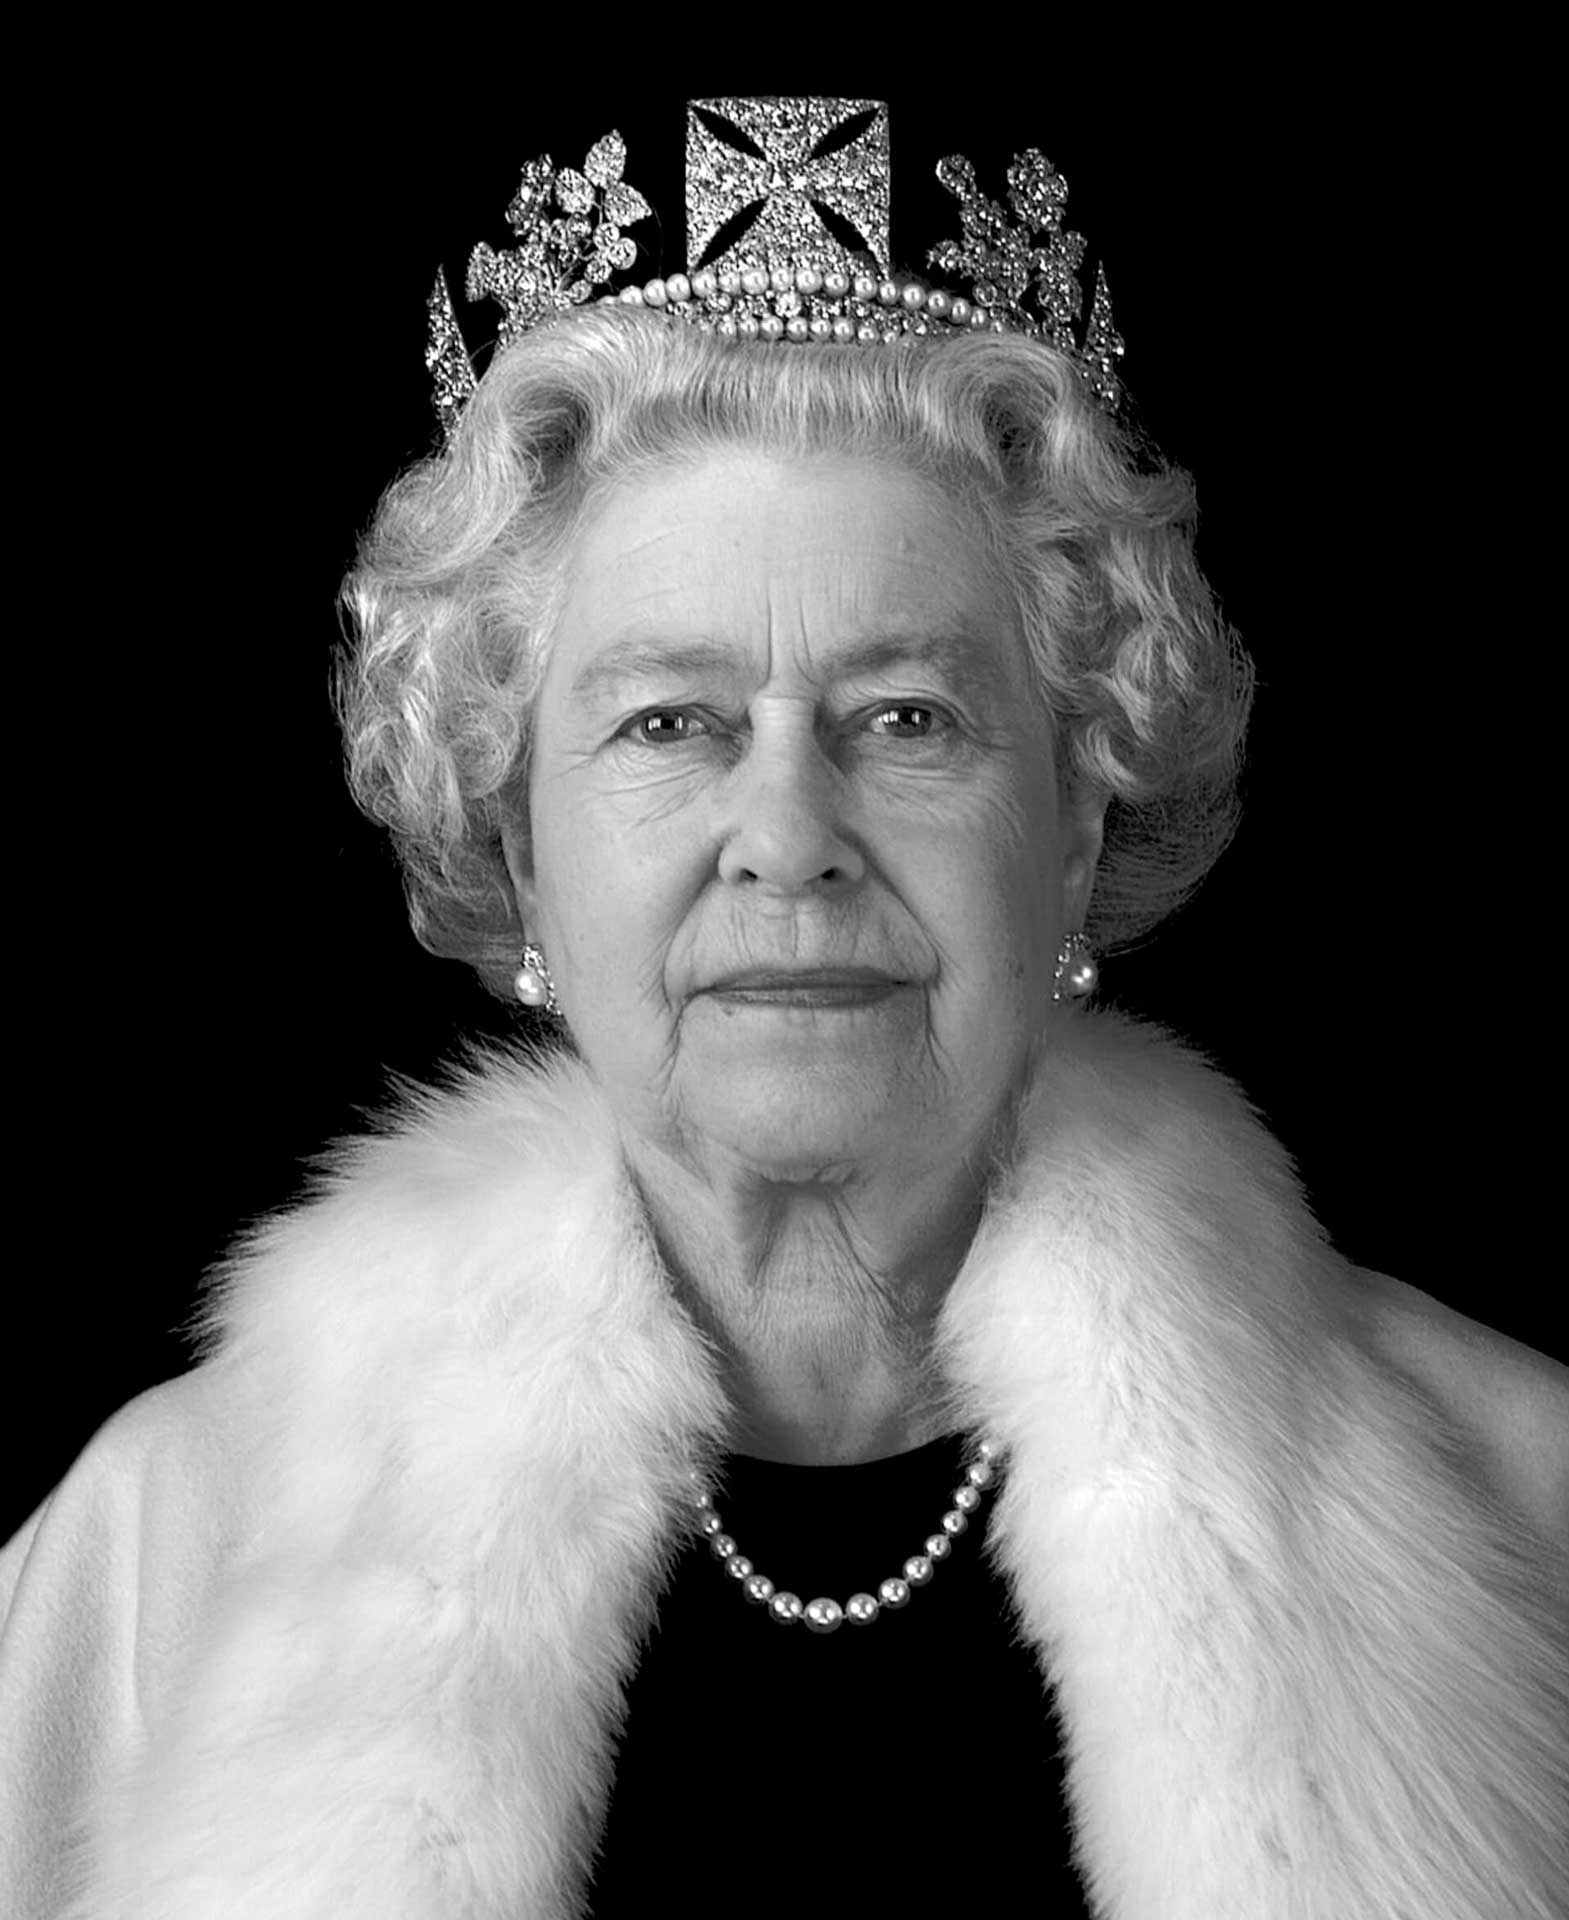 Statement on the death of Her Majesty Queen Elizabeth II